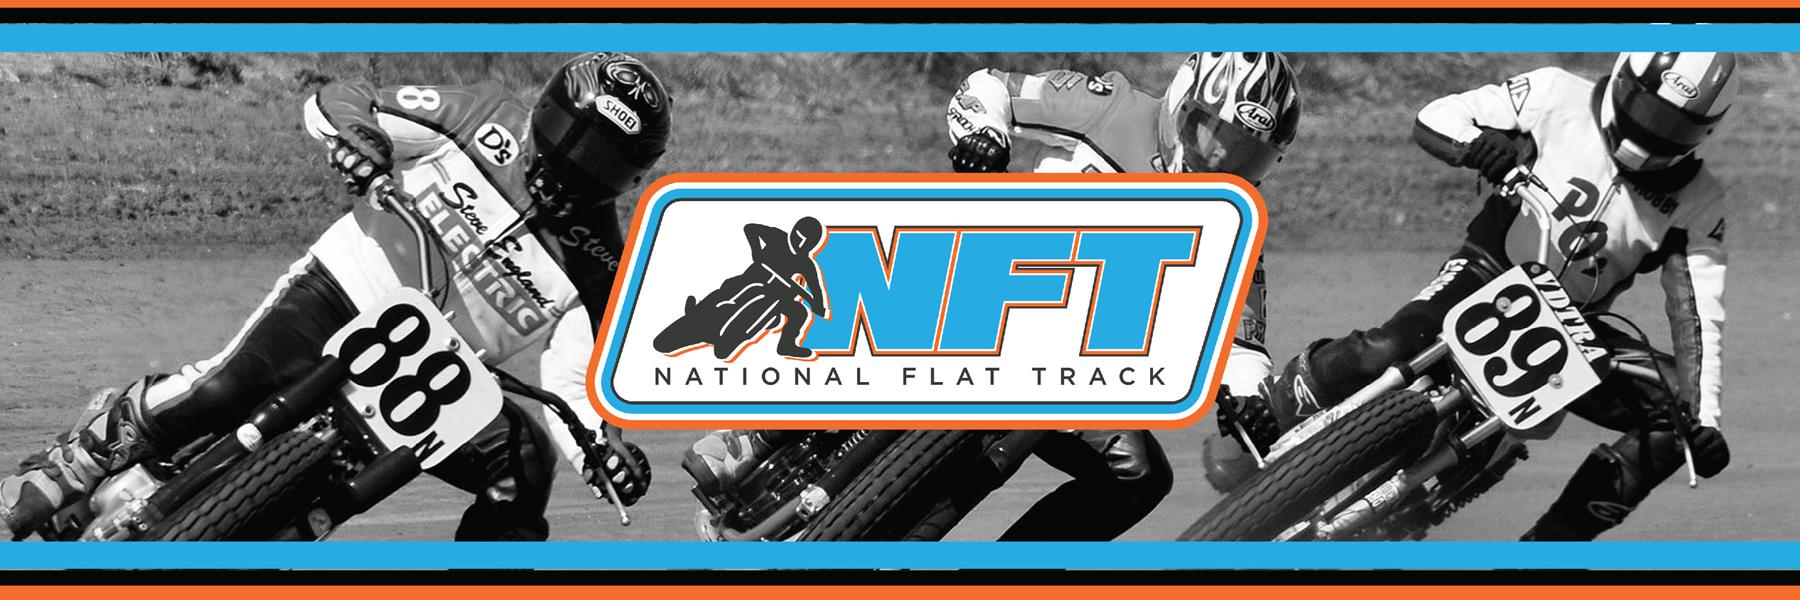 National Flat Track